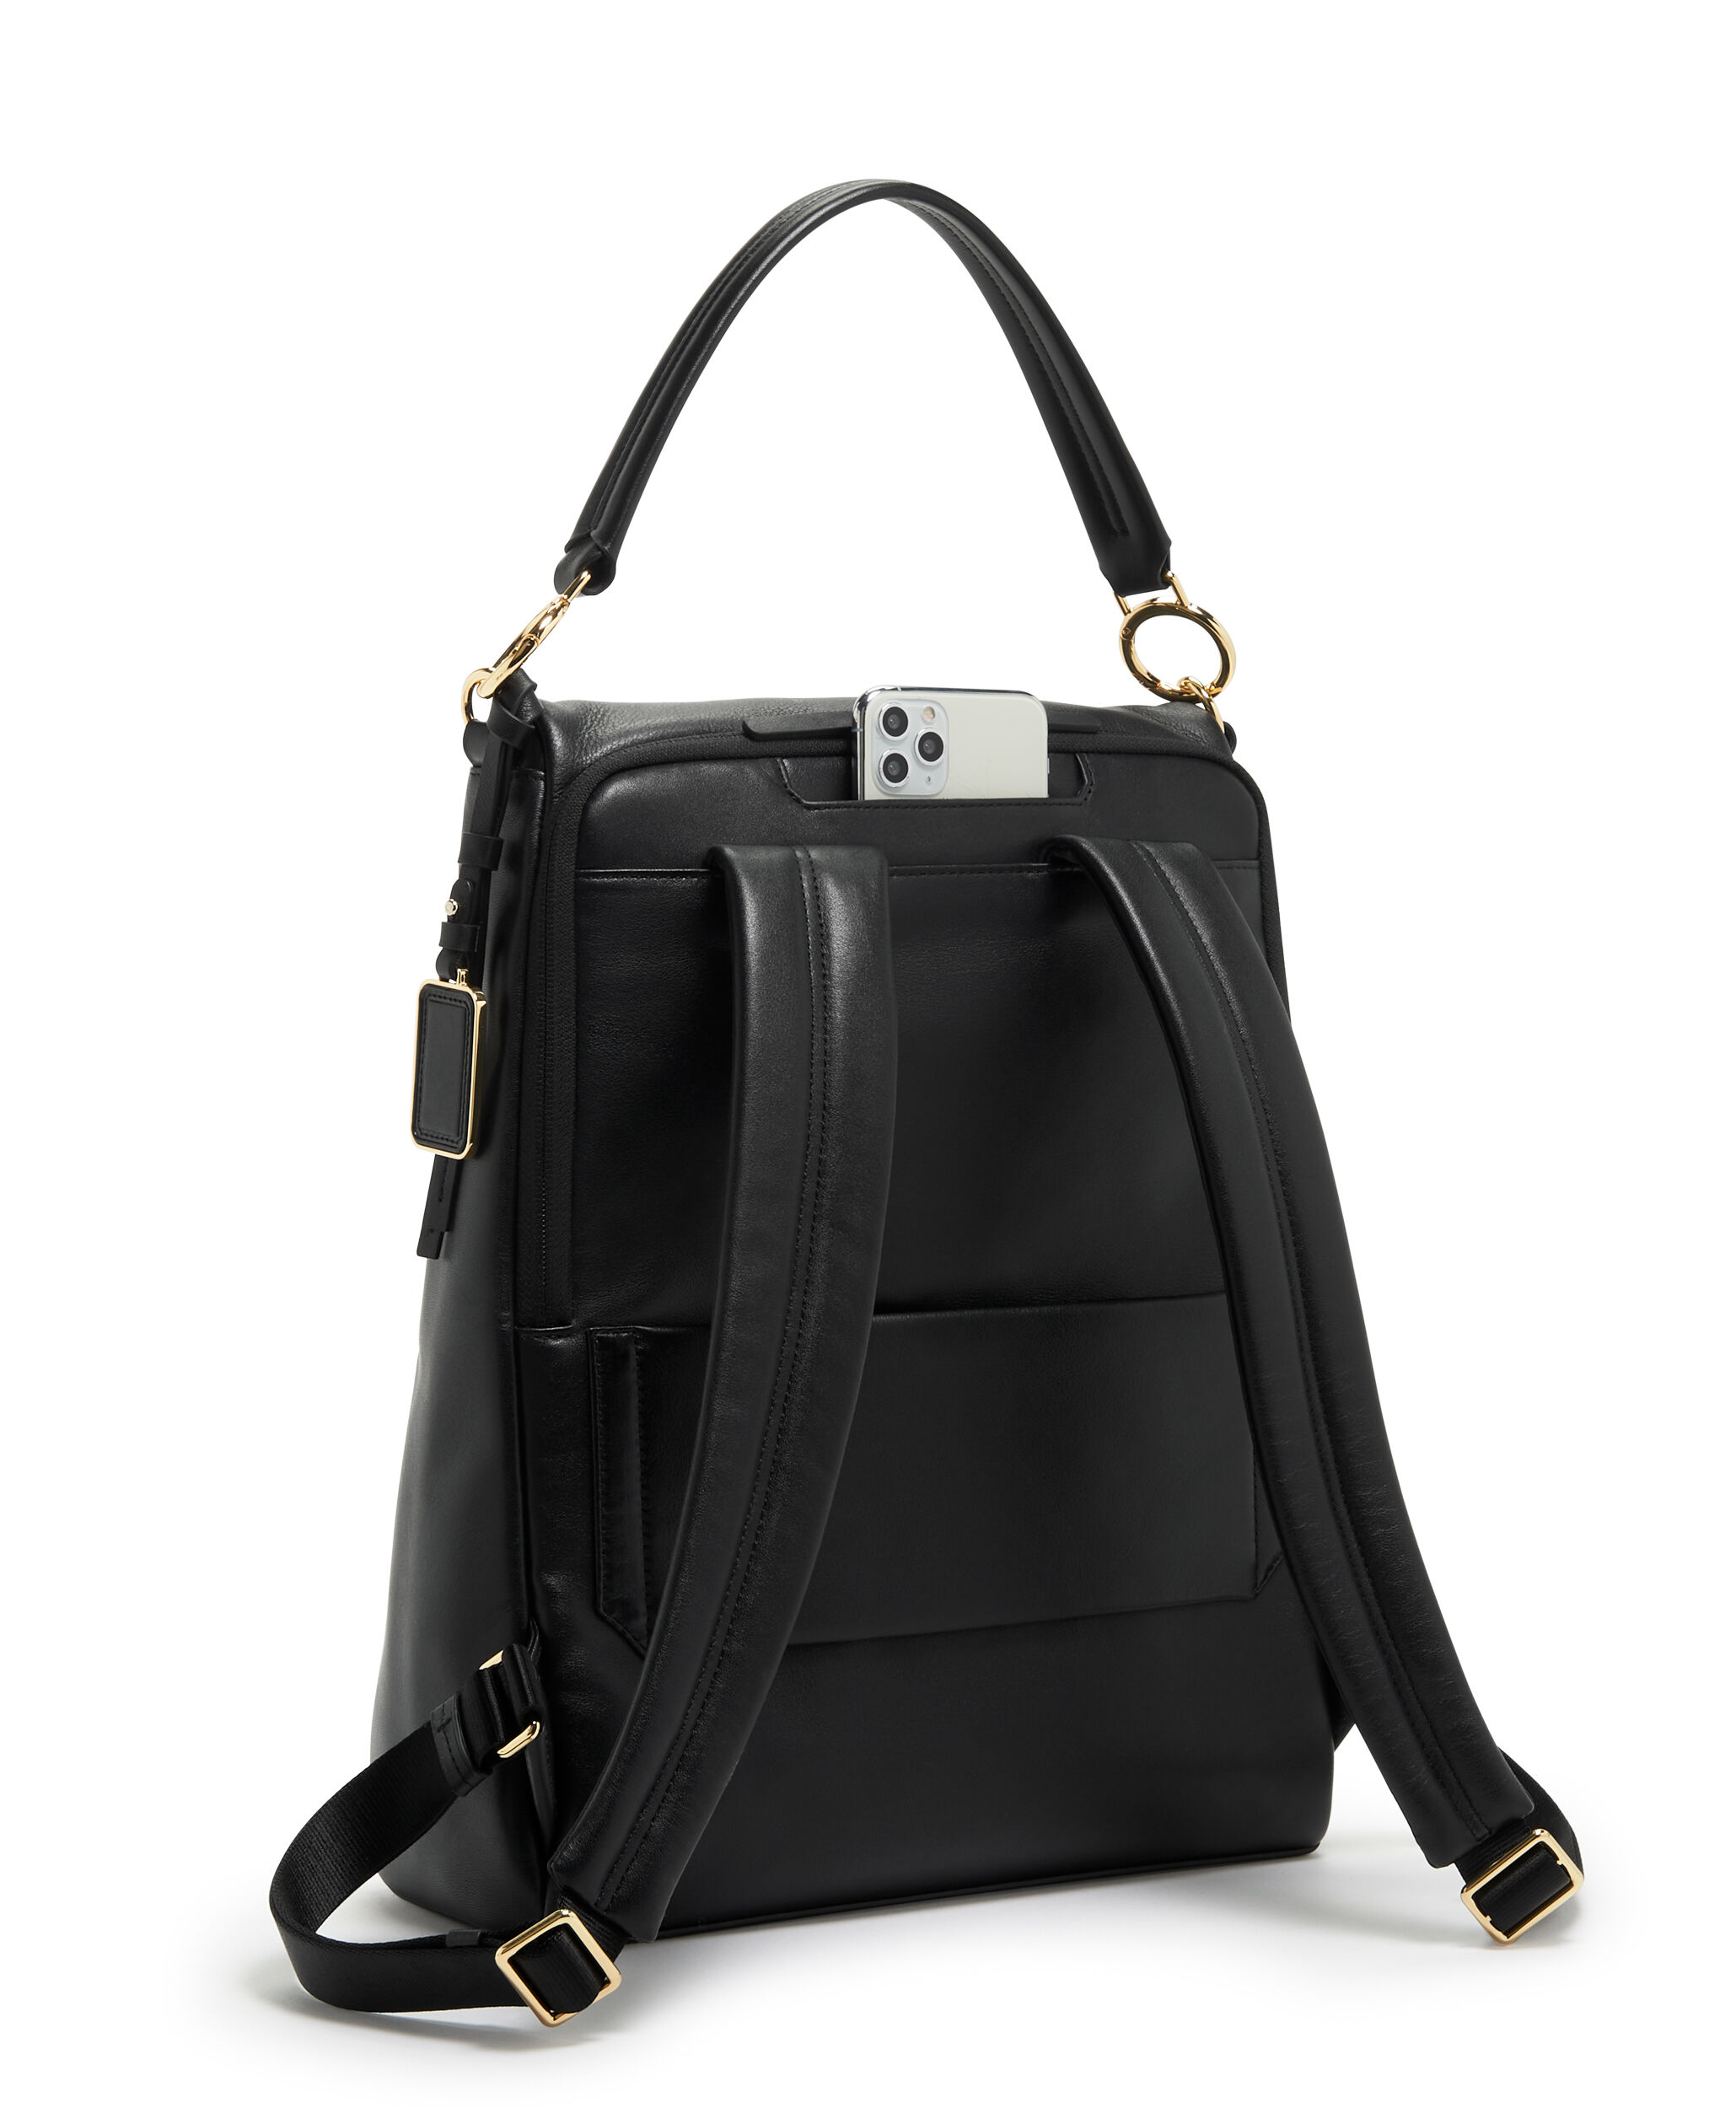 Tumi Nylon Leather-Trimmed Sling Bag - Black Backpacks, Bags - TMI55889 |  The RealReal